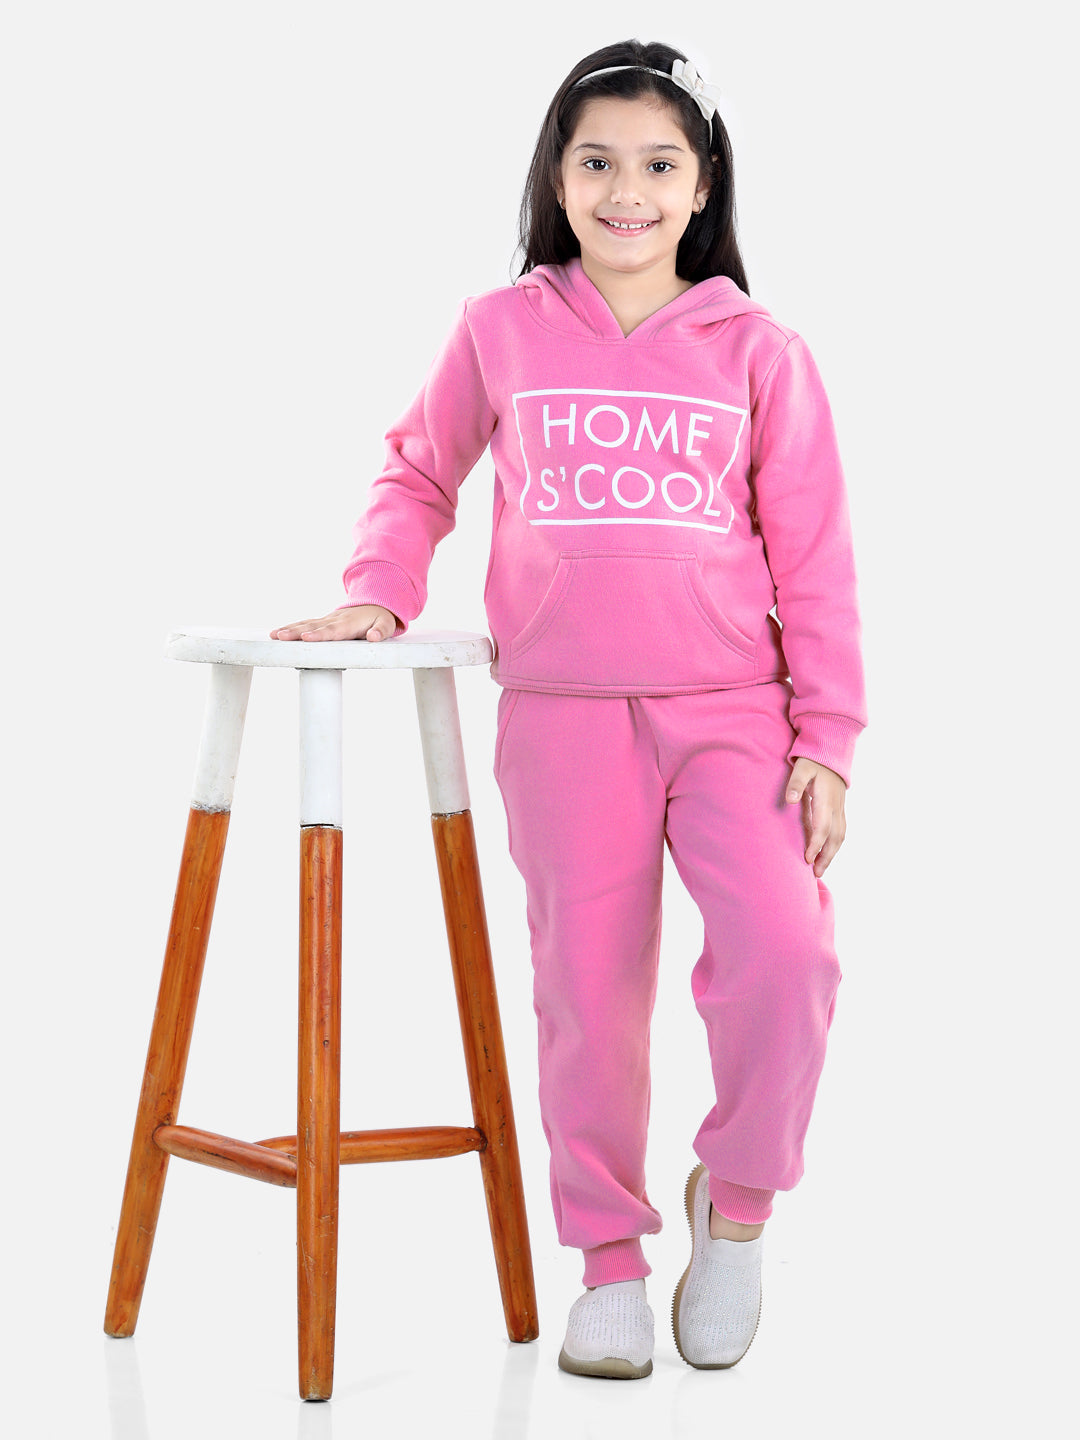 StyleStone Girls Dark Pink Home S'Cool Printed Hooded Track Suit Set